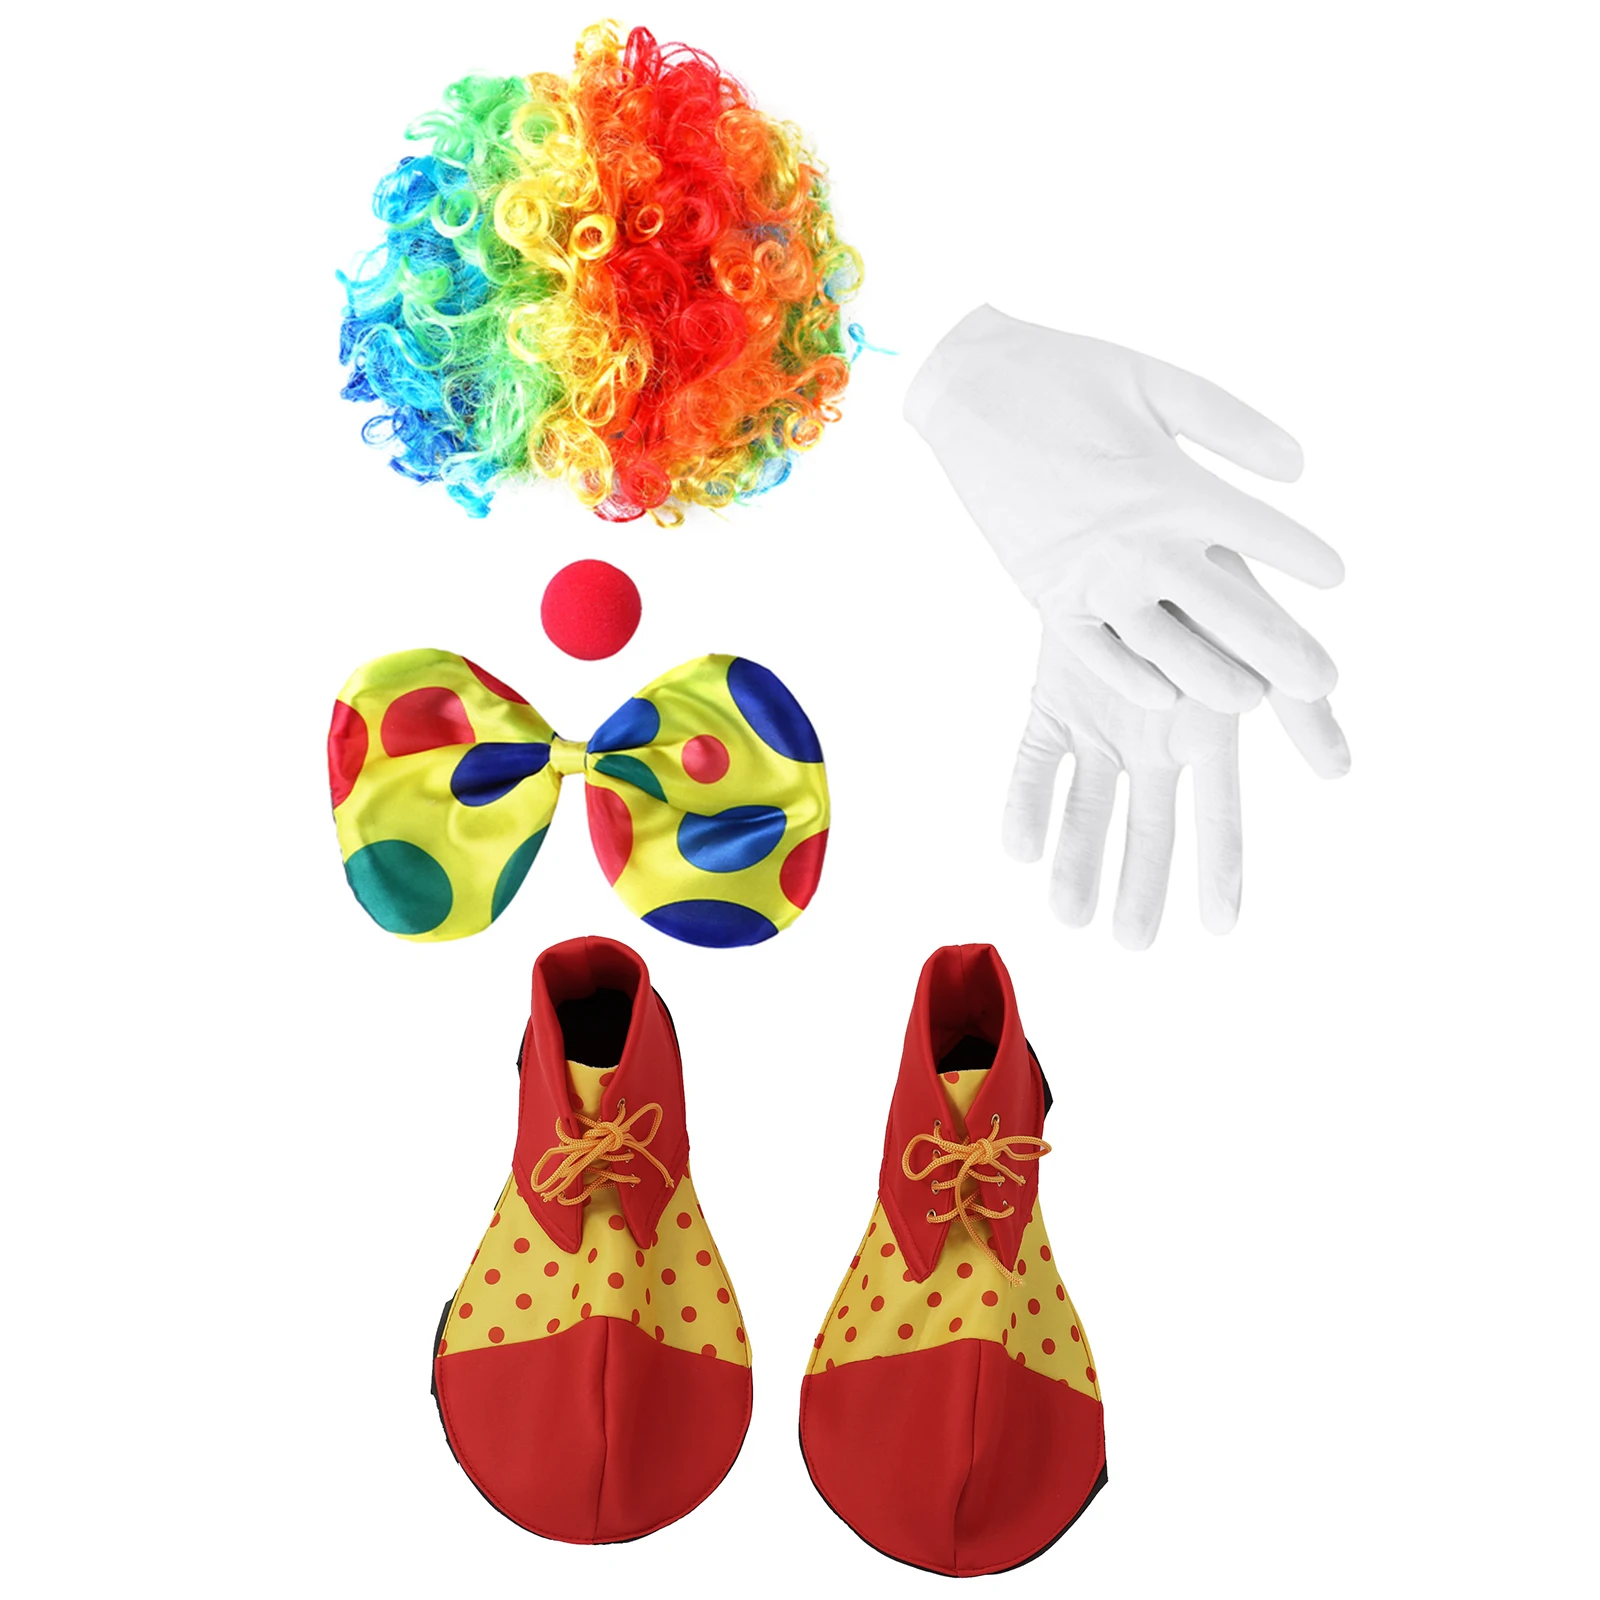 Rainbow Clown เครื่องแต่งกายเครื่องแต่งกายชุดวิกผมสีแดงฟองน้ำจมูก Dots Bow Tie สีขาวถุงมือ Clown ขนาดใหญ่ชุดร...